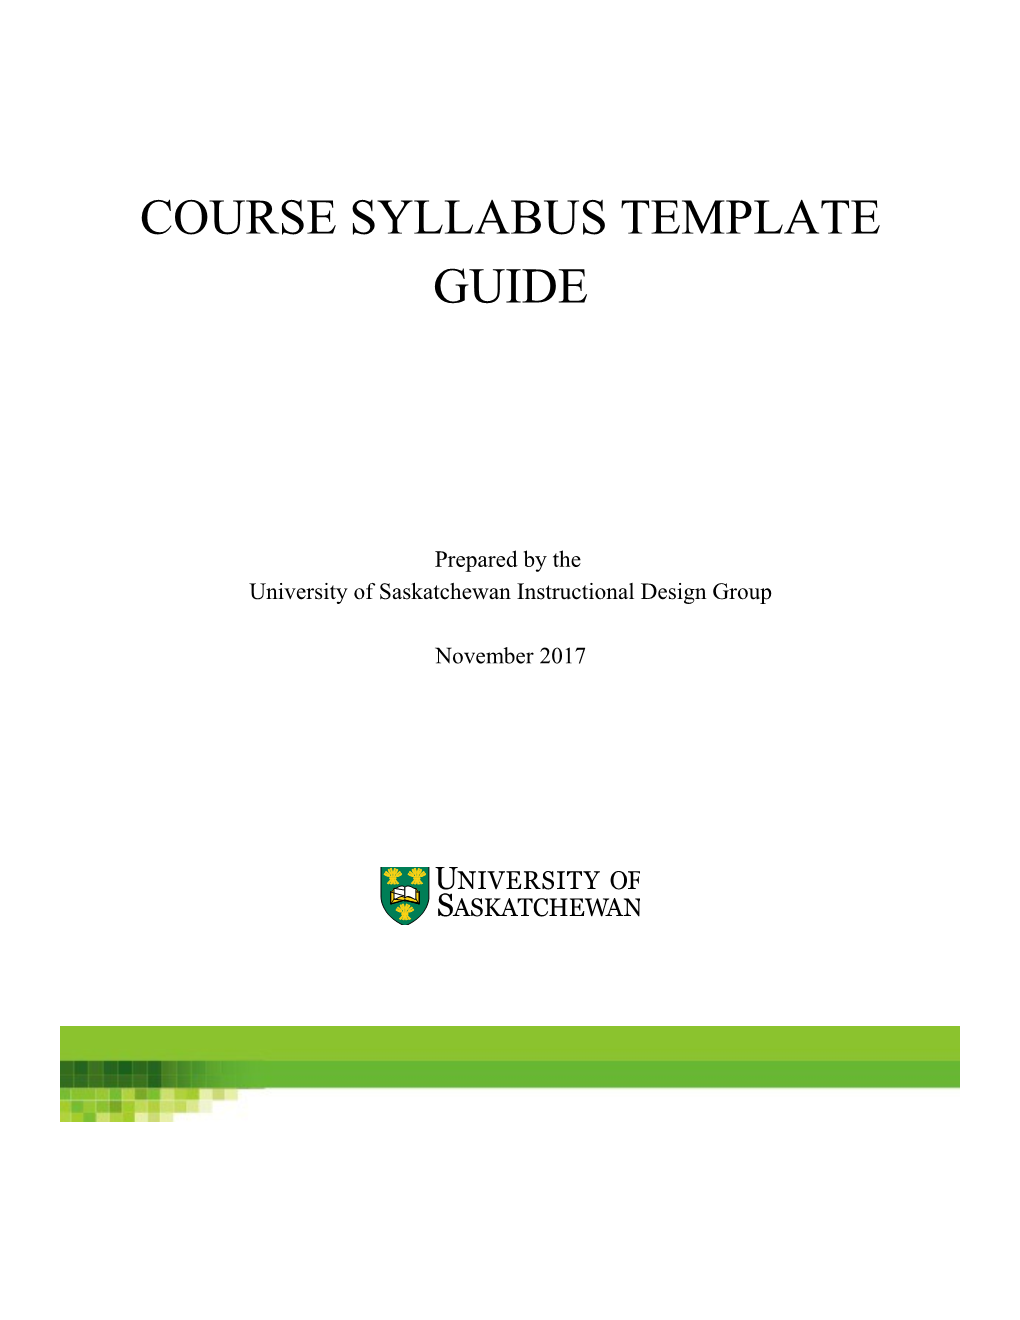 Course Syllabus Template Guide